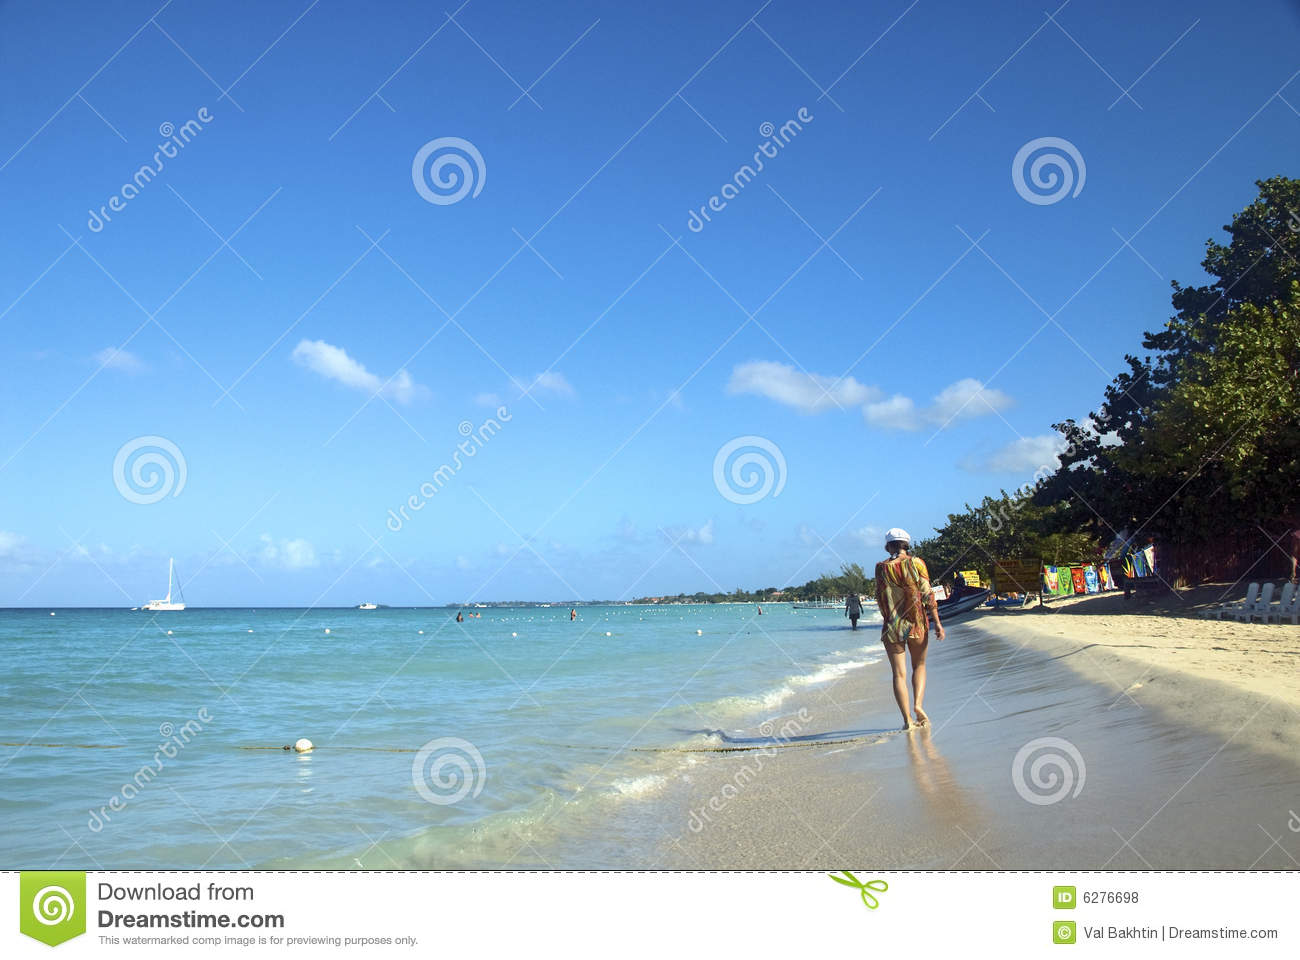 Jamaica Negril Long Beach Royalty Free Stock Photos   Image  6276698